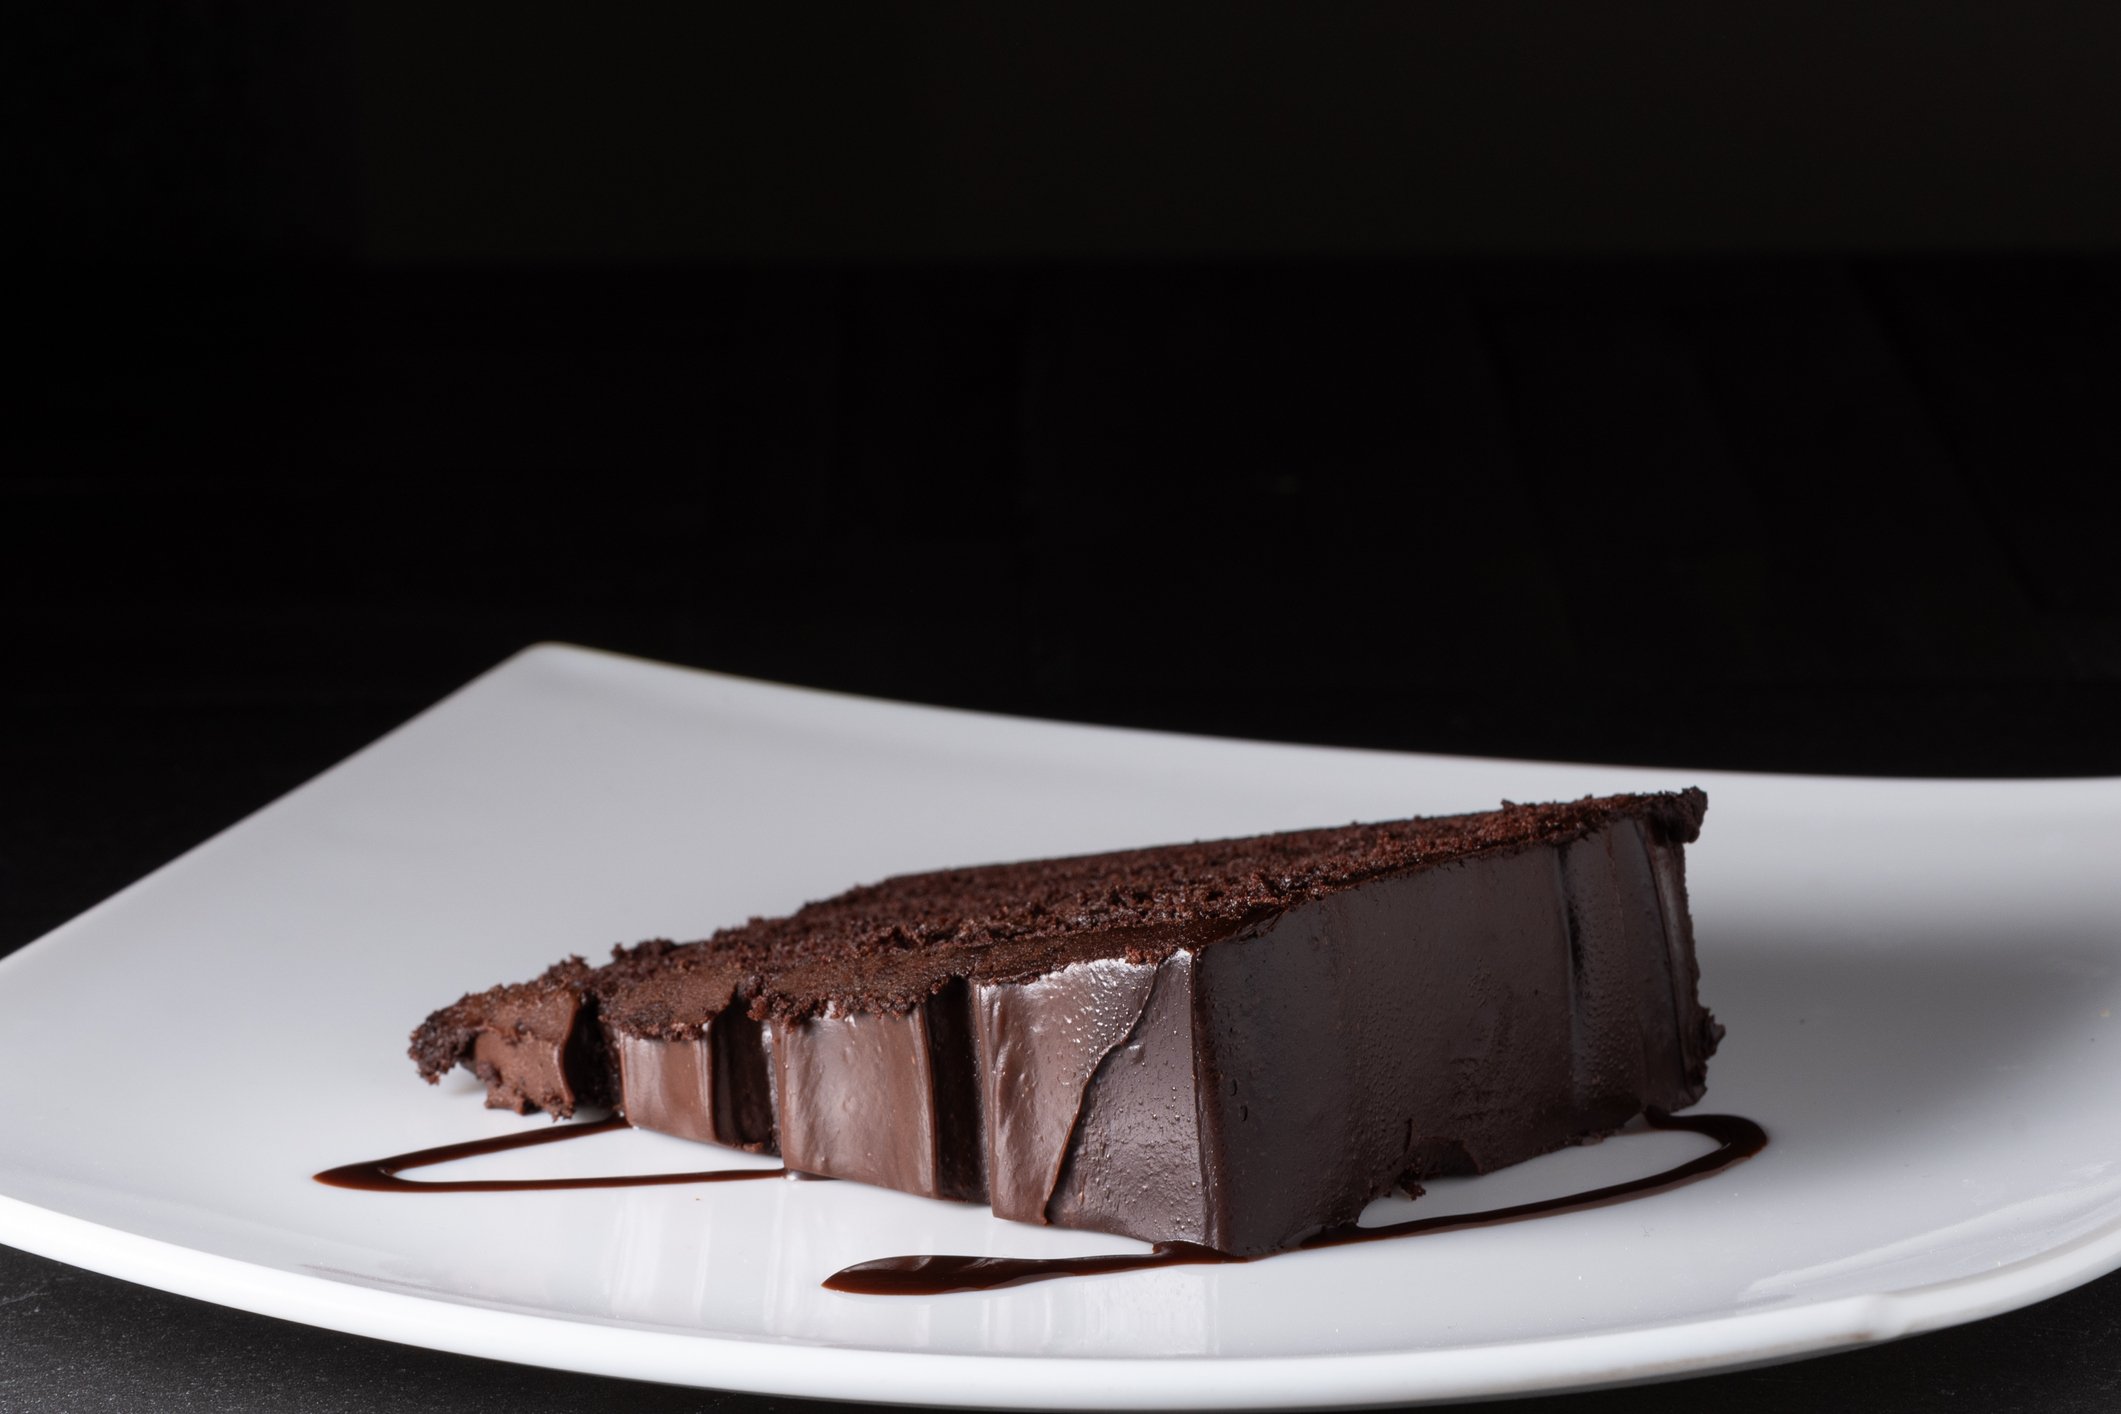 Delicious slice of chocolate cake